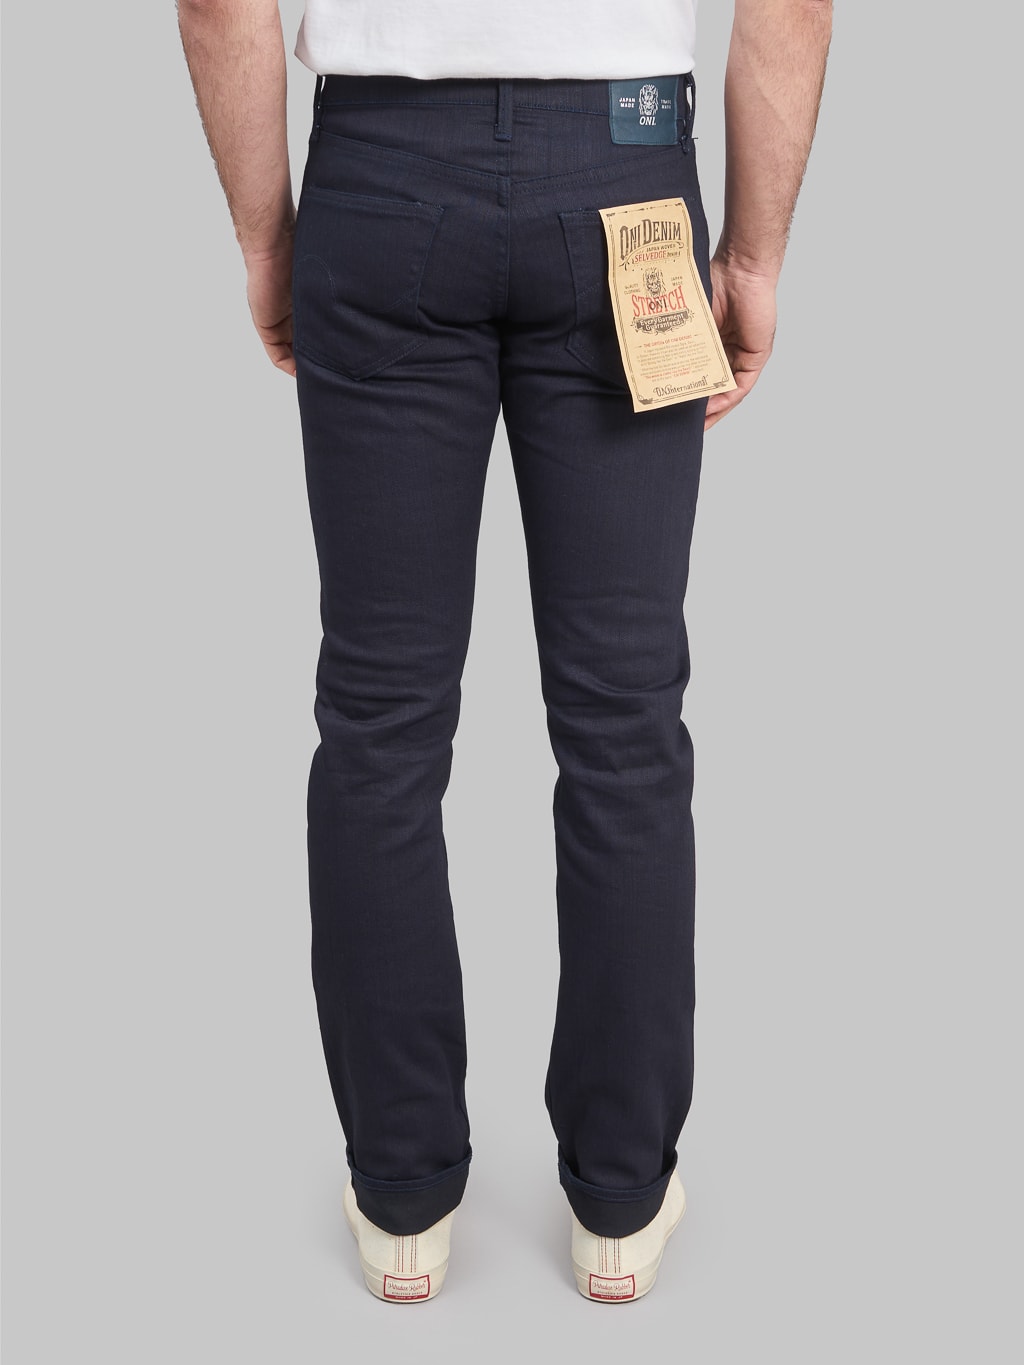 ONI Denim 526S-IDBK "High Power Stretch Denim" 11oz Semi Tight Straight Jeans